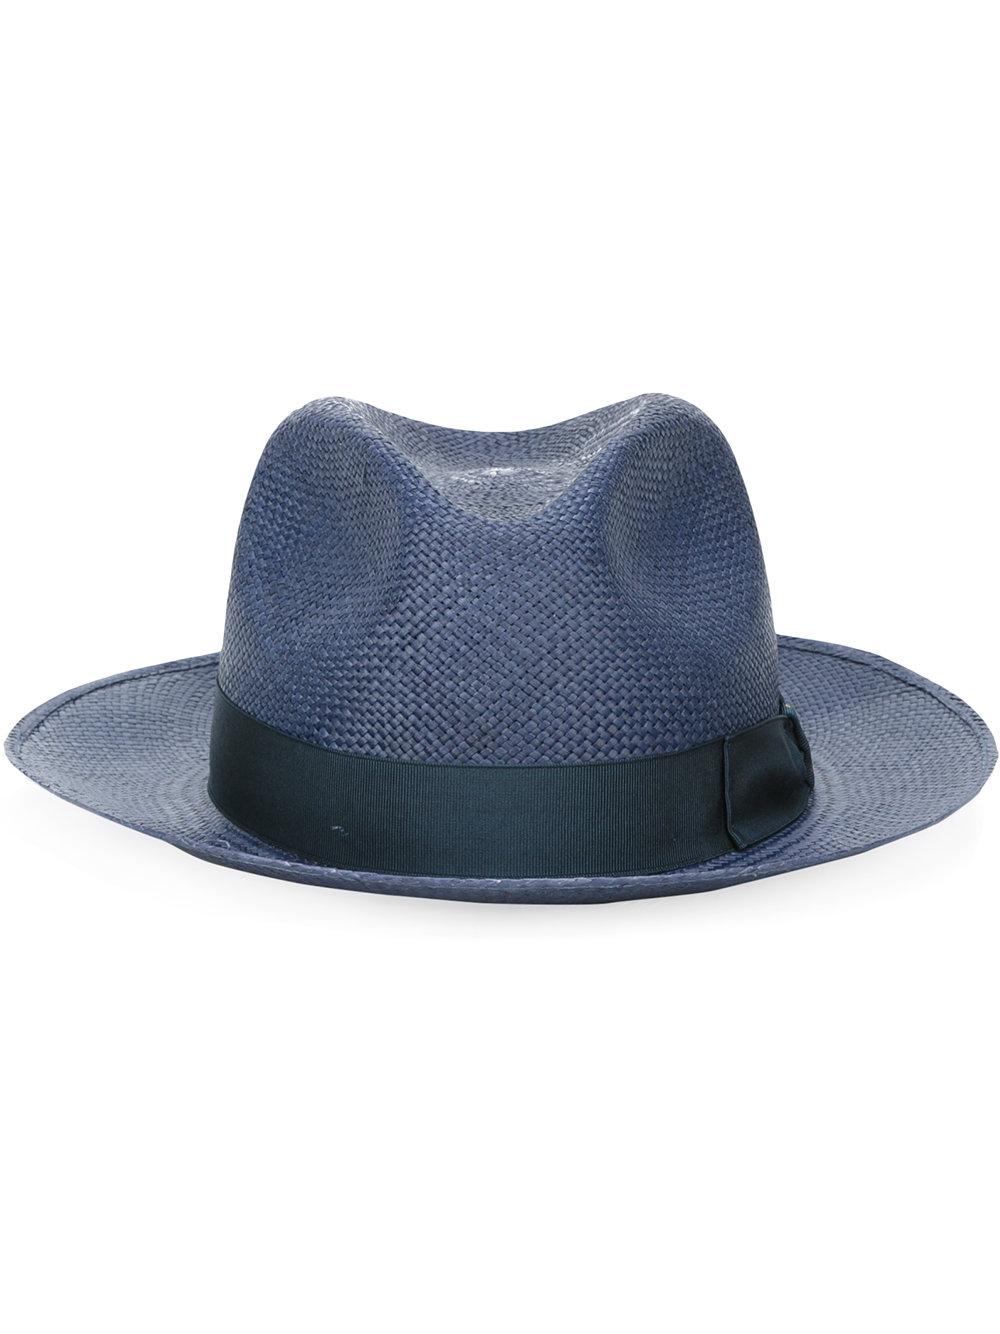 Lyst - Borsalino Quito Panama Hat in Blue for Men